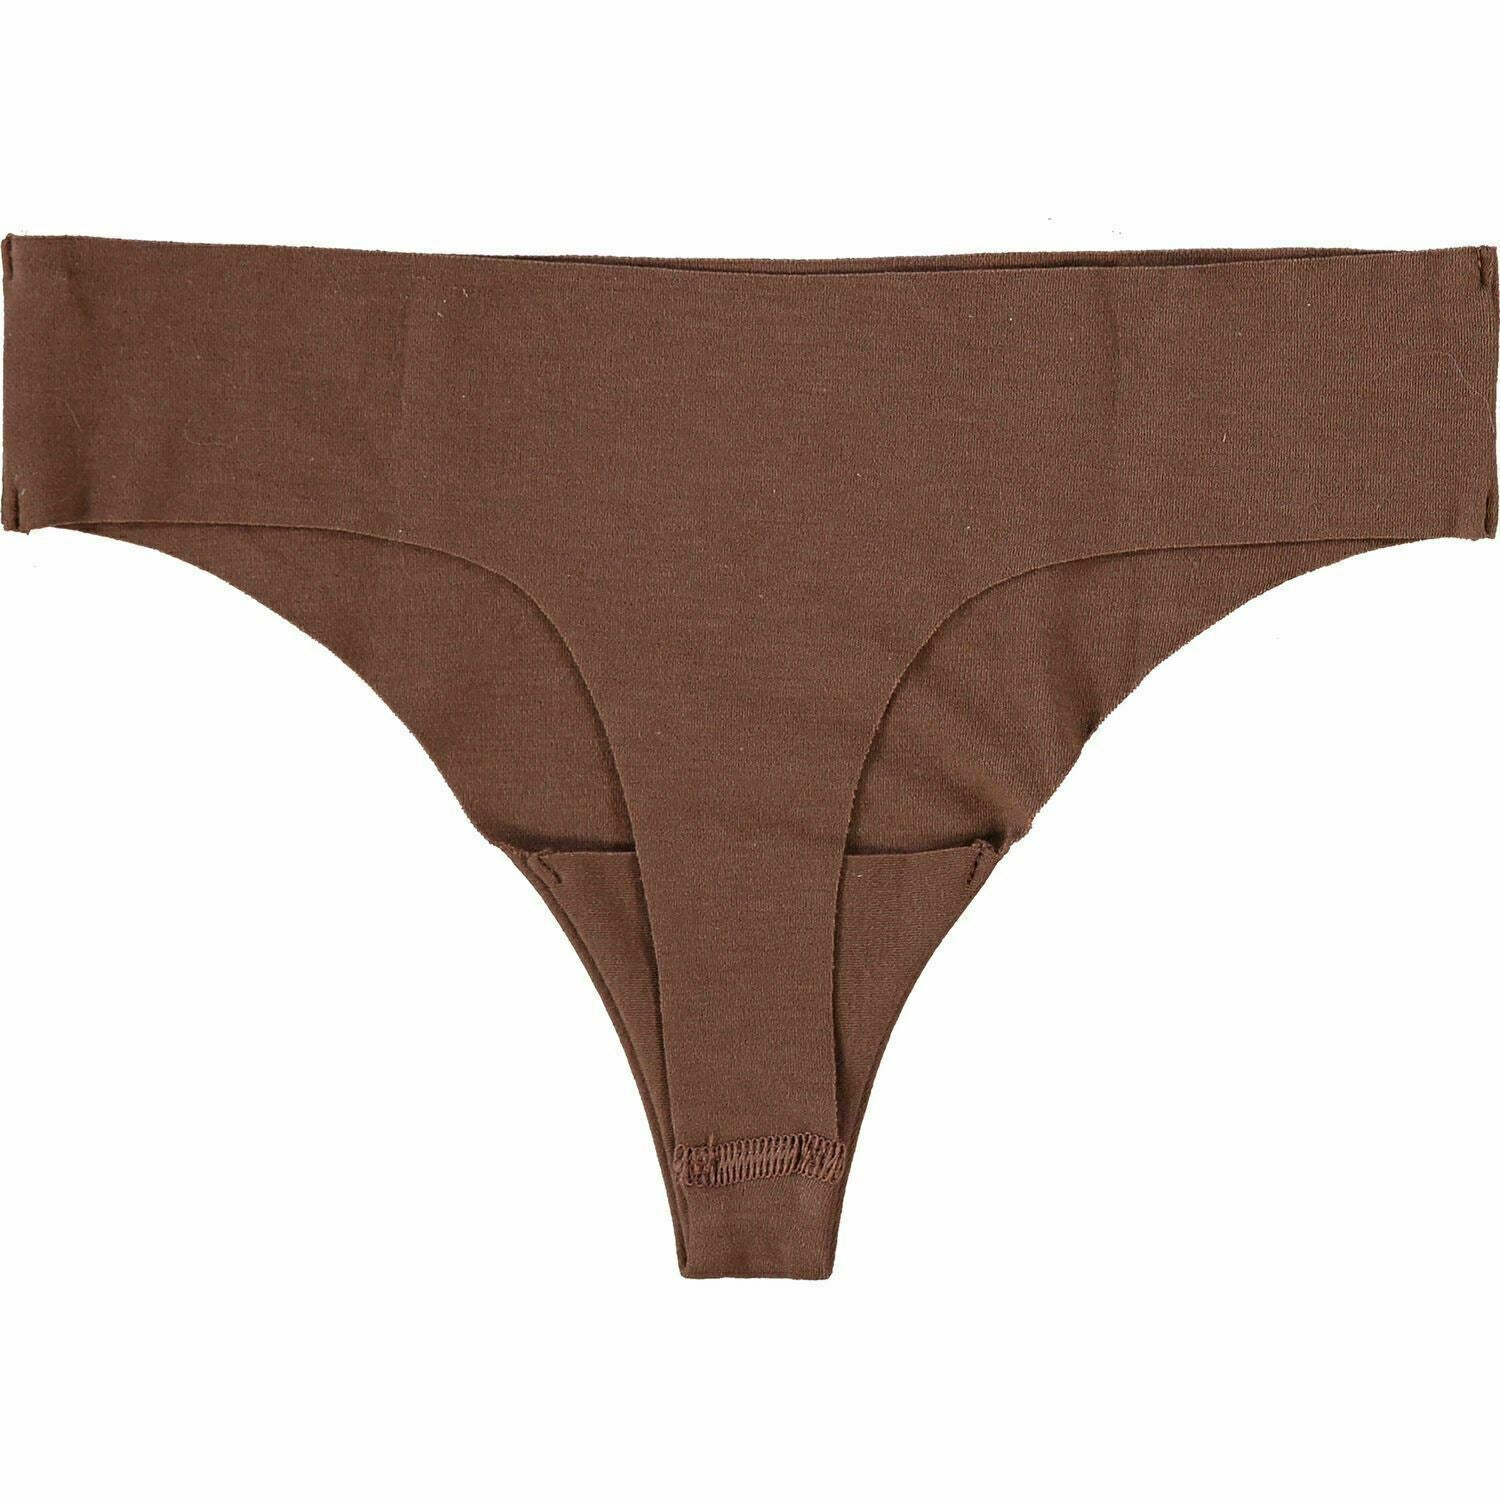 HANRO Womens Underwear Invisible Cotton Thongs Knickers Mocha size M UK 12 UK 14